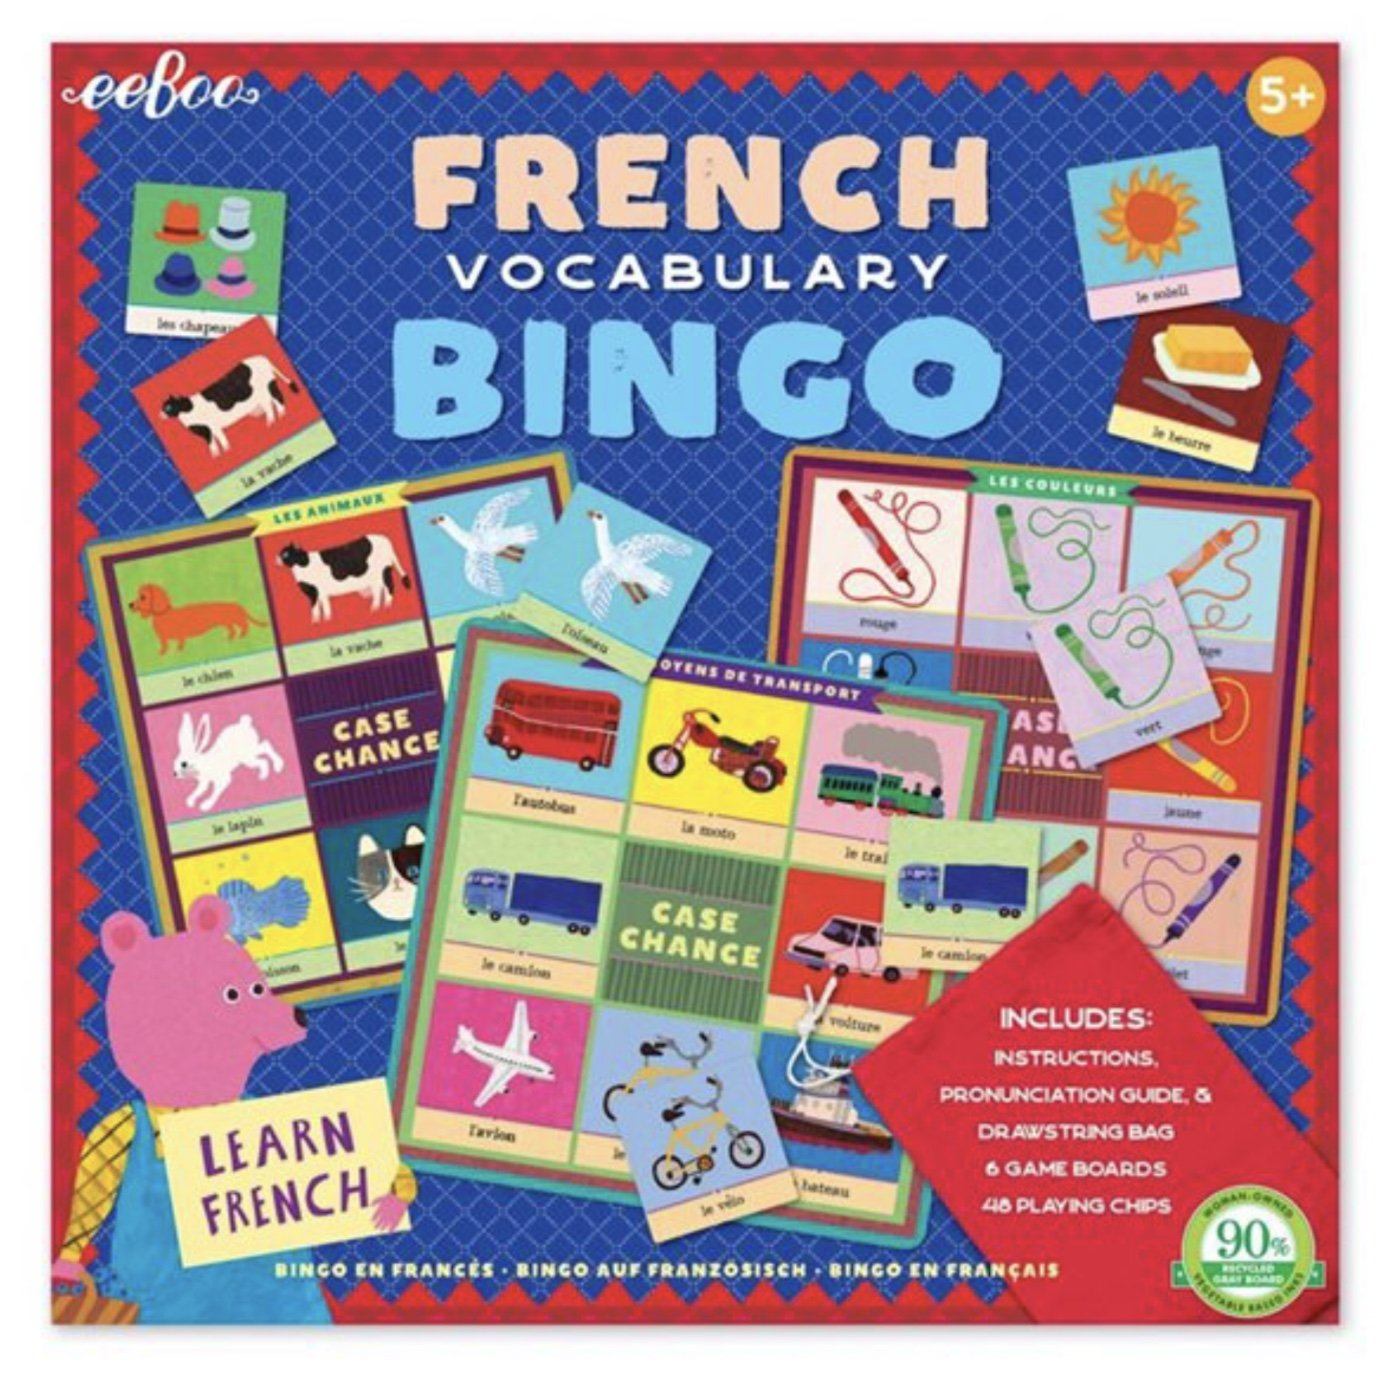 French Vocabulary Bingo for Kids by eeBoo Kids Eeboo Prettycleanshop